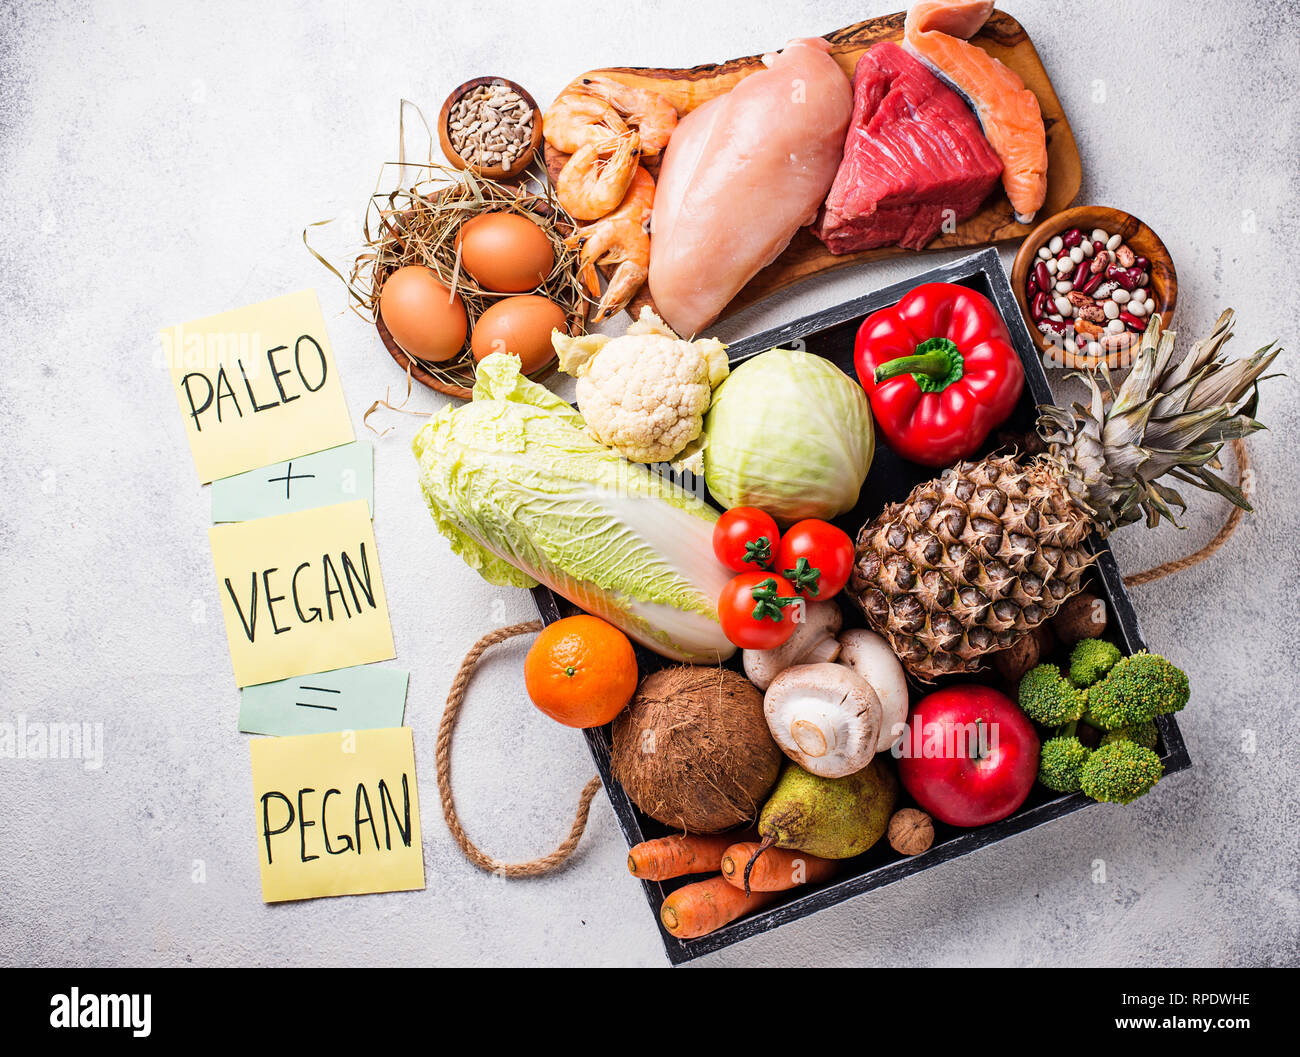 Pegan dieta. Paleo e prodotti vegan Foto Stock